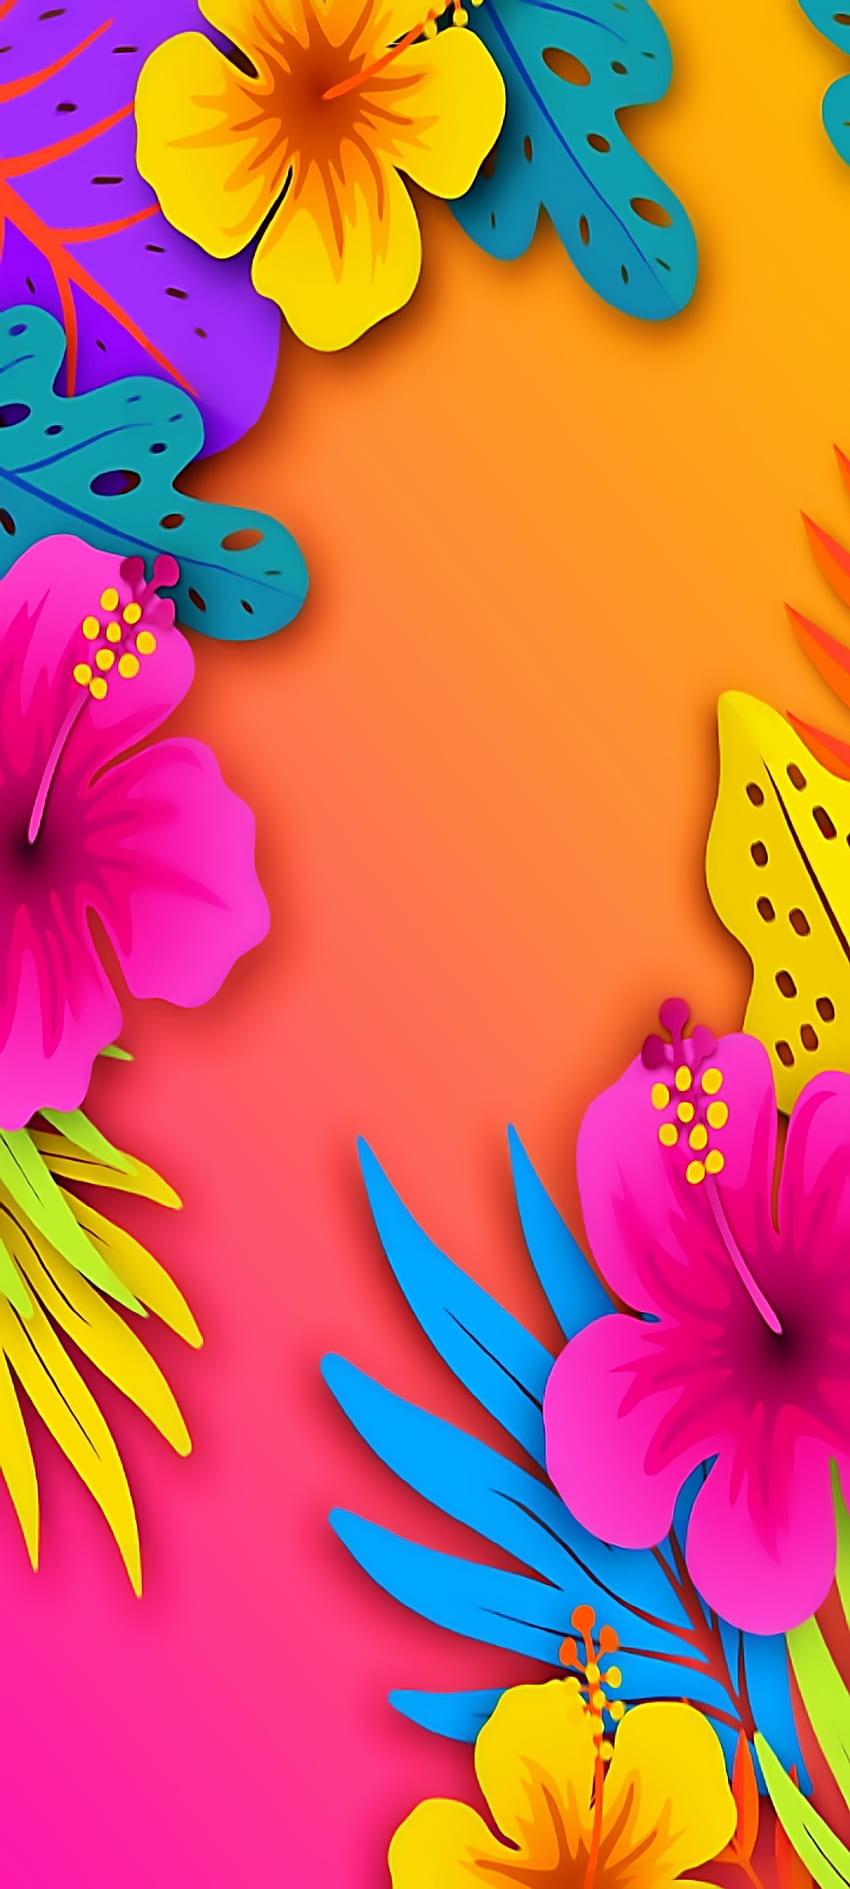 920848 Tropical Flower Wallpaper Images Stock Photos  Vectors   Shutterstock